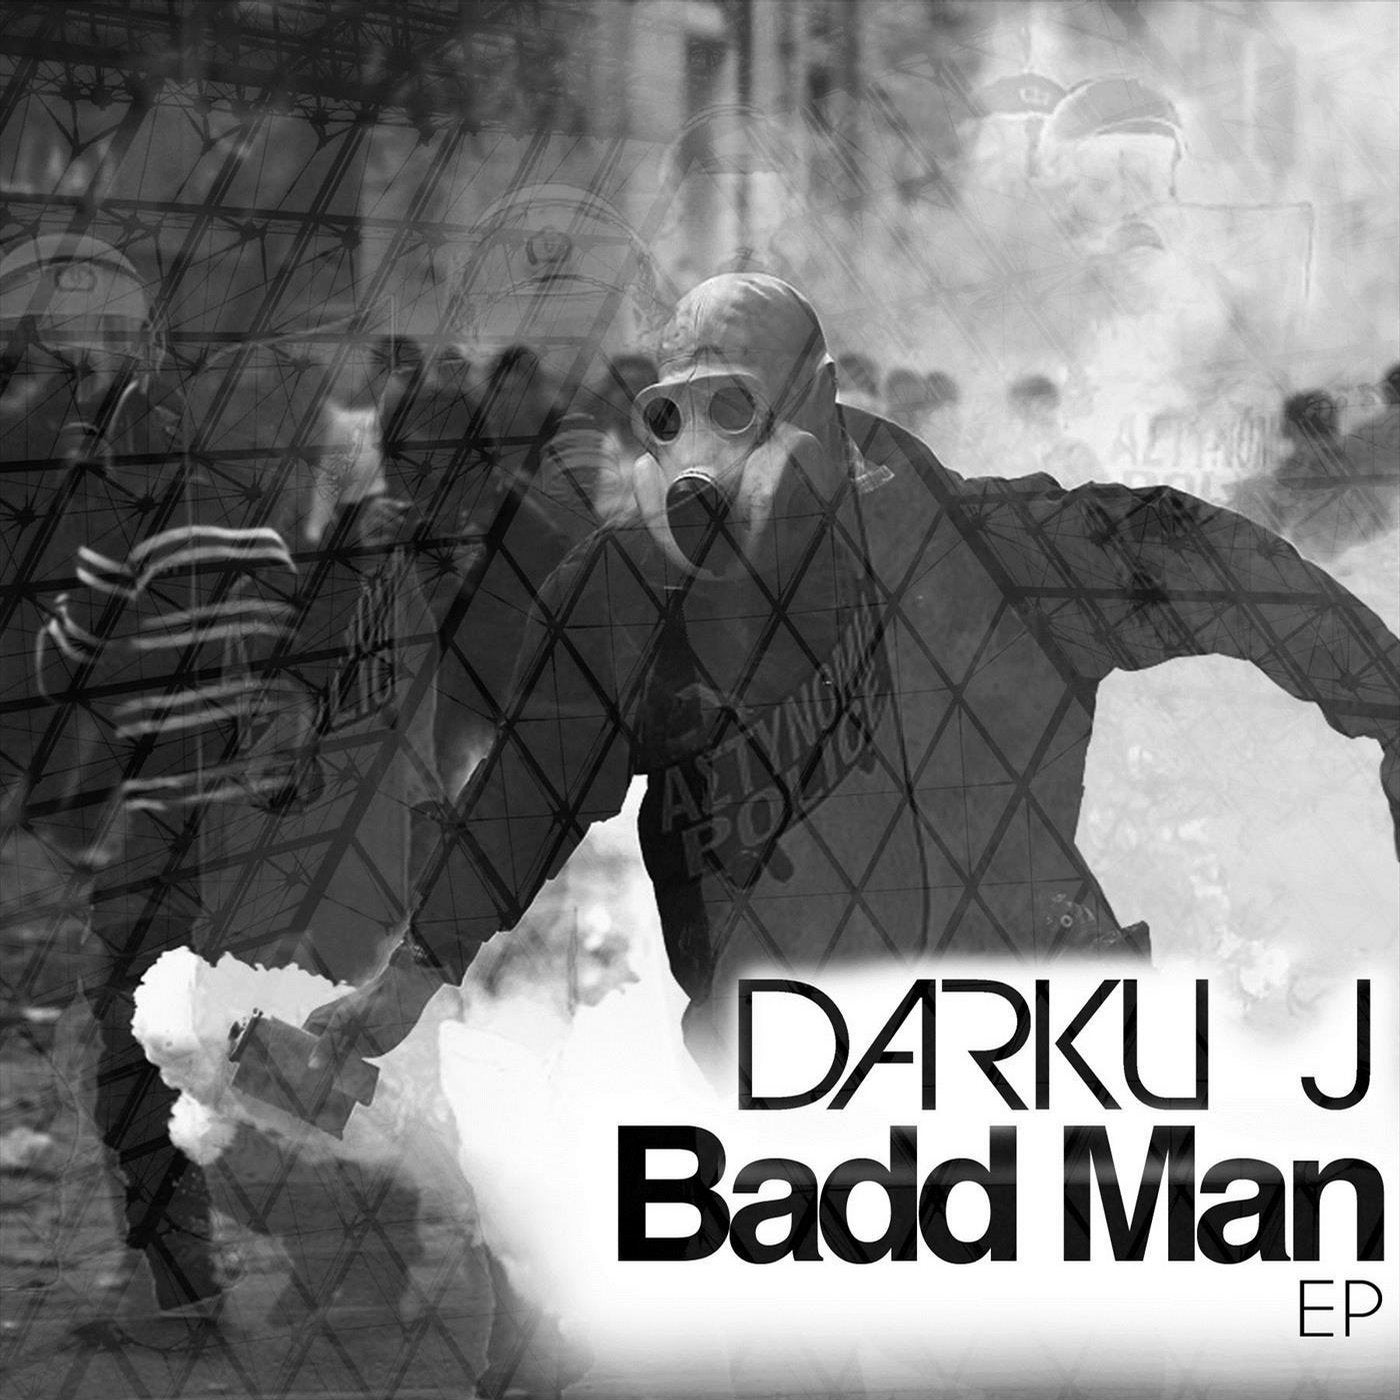 Badd Man EP